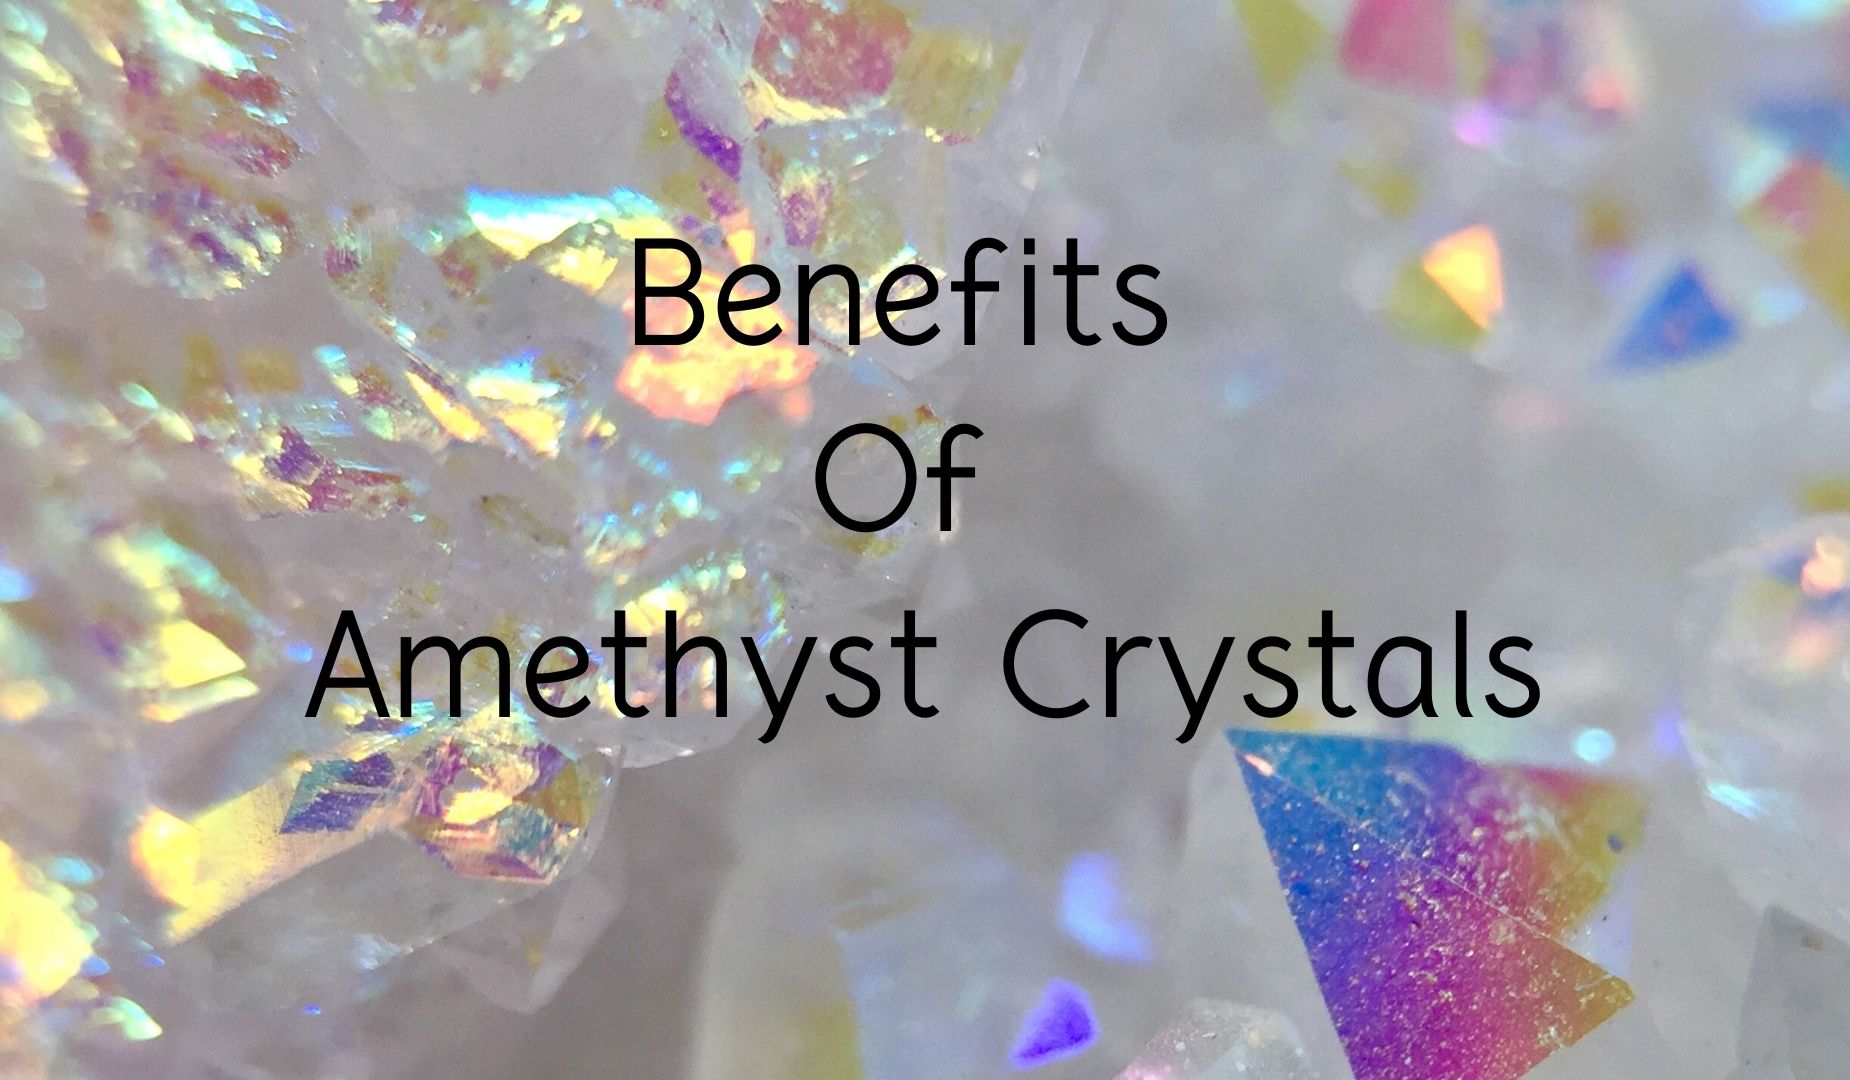 Benefits of Amethyst Crystals